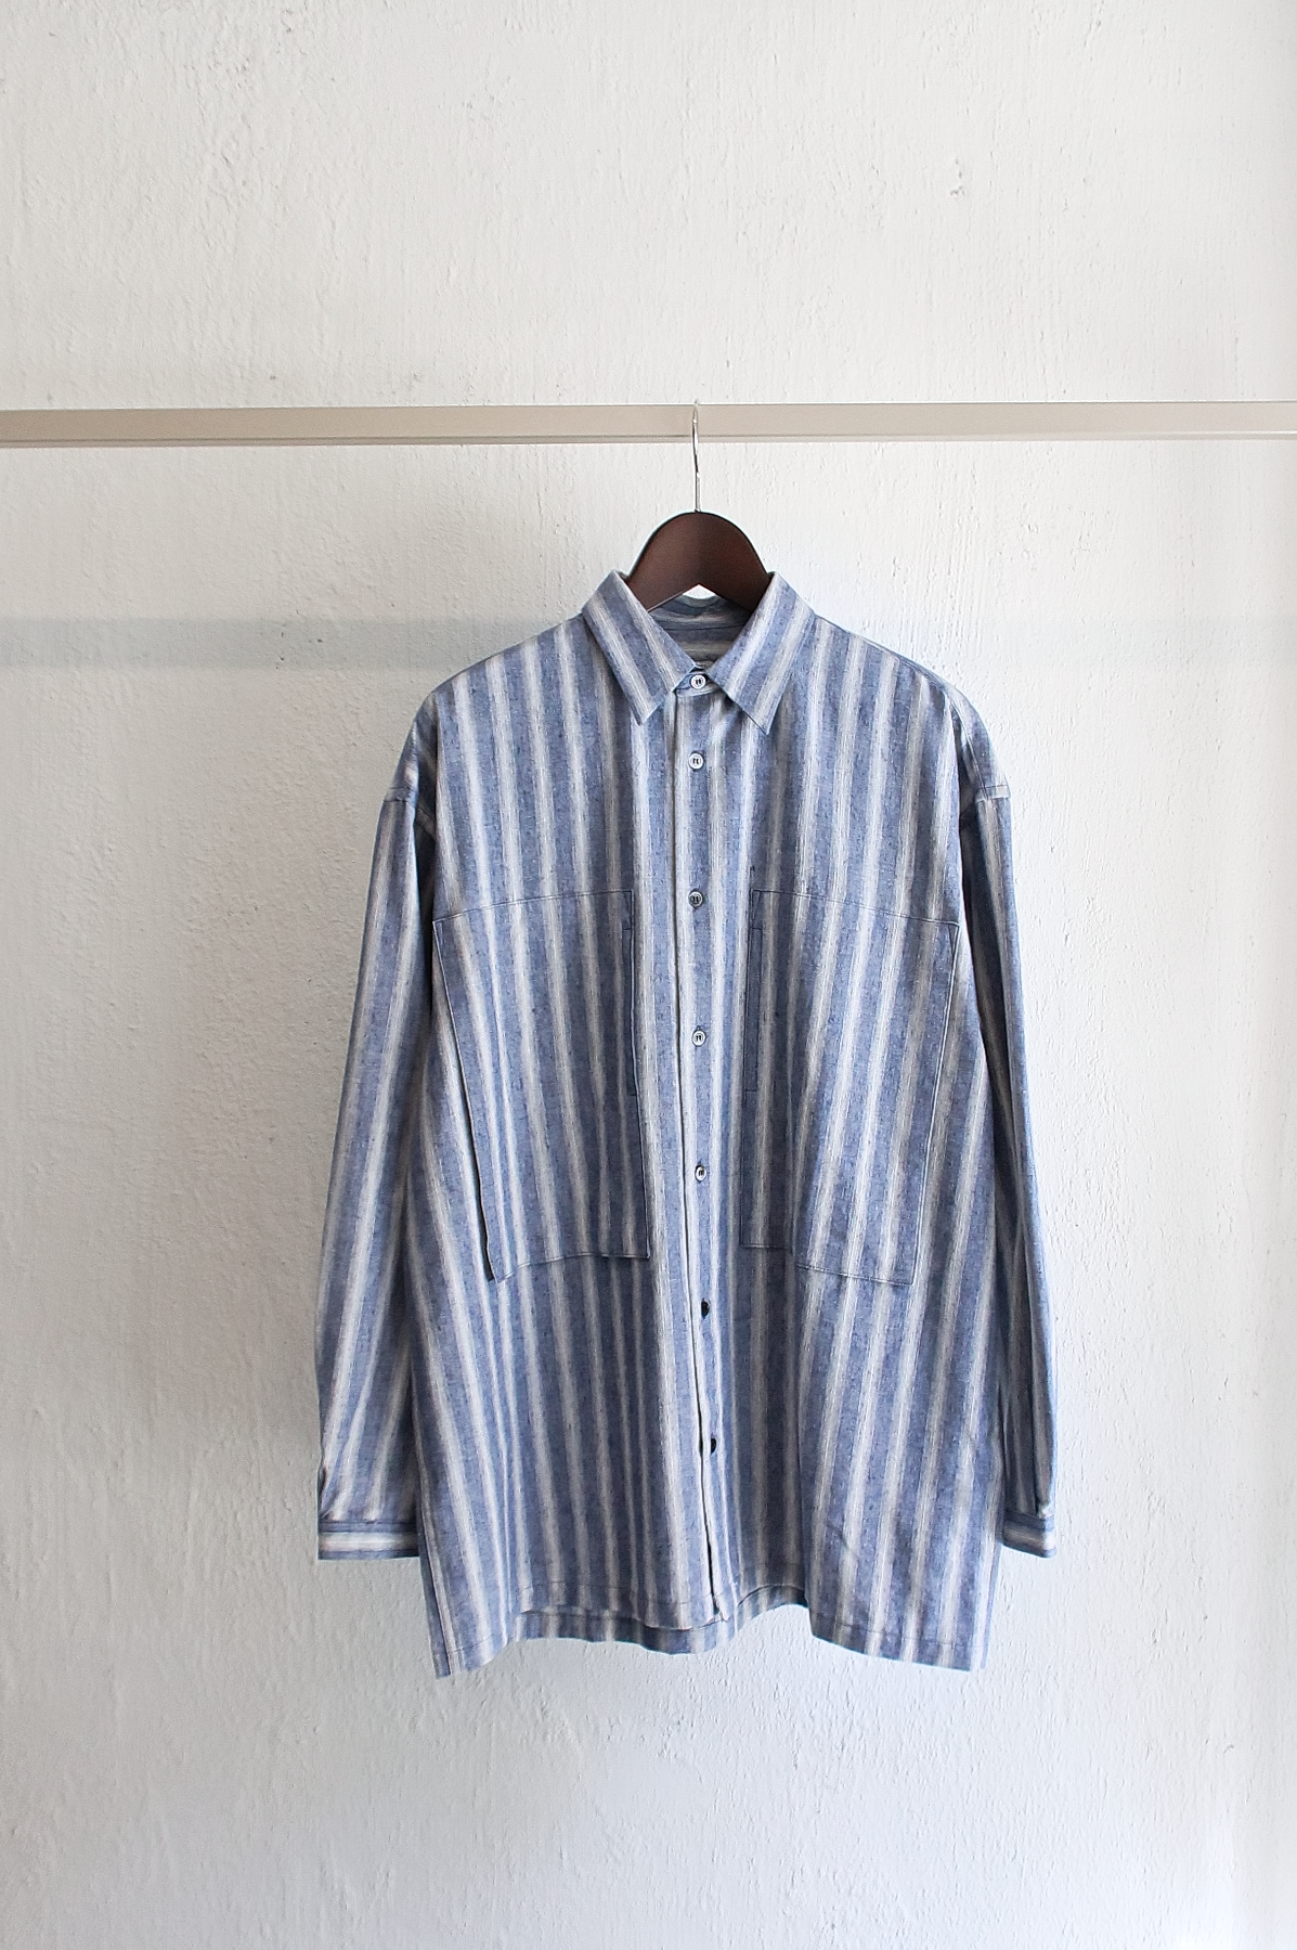 [E.TAUTZ] Lineman Shirt - Denim Blue/White Brushed Stripe